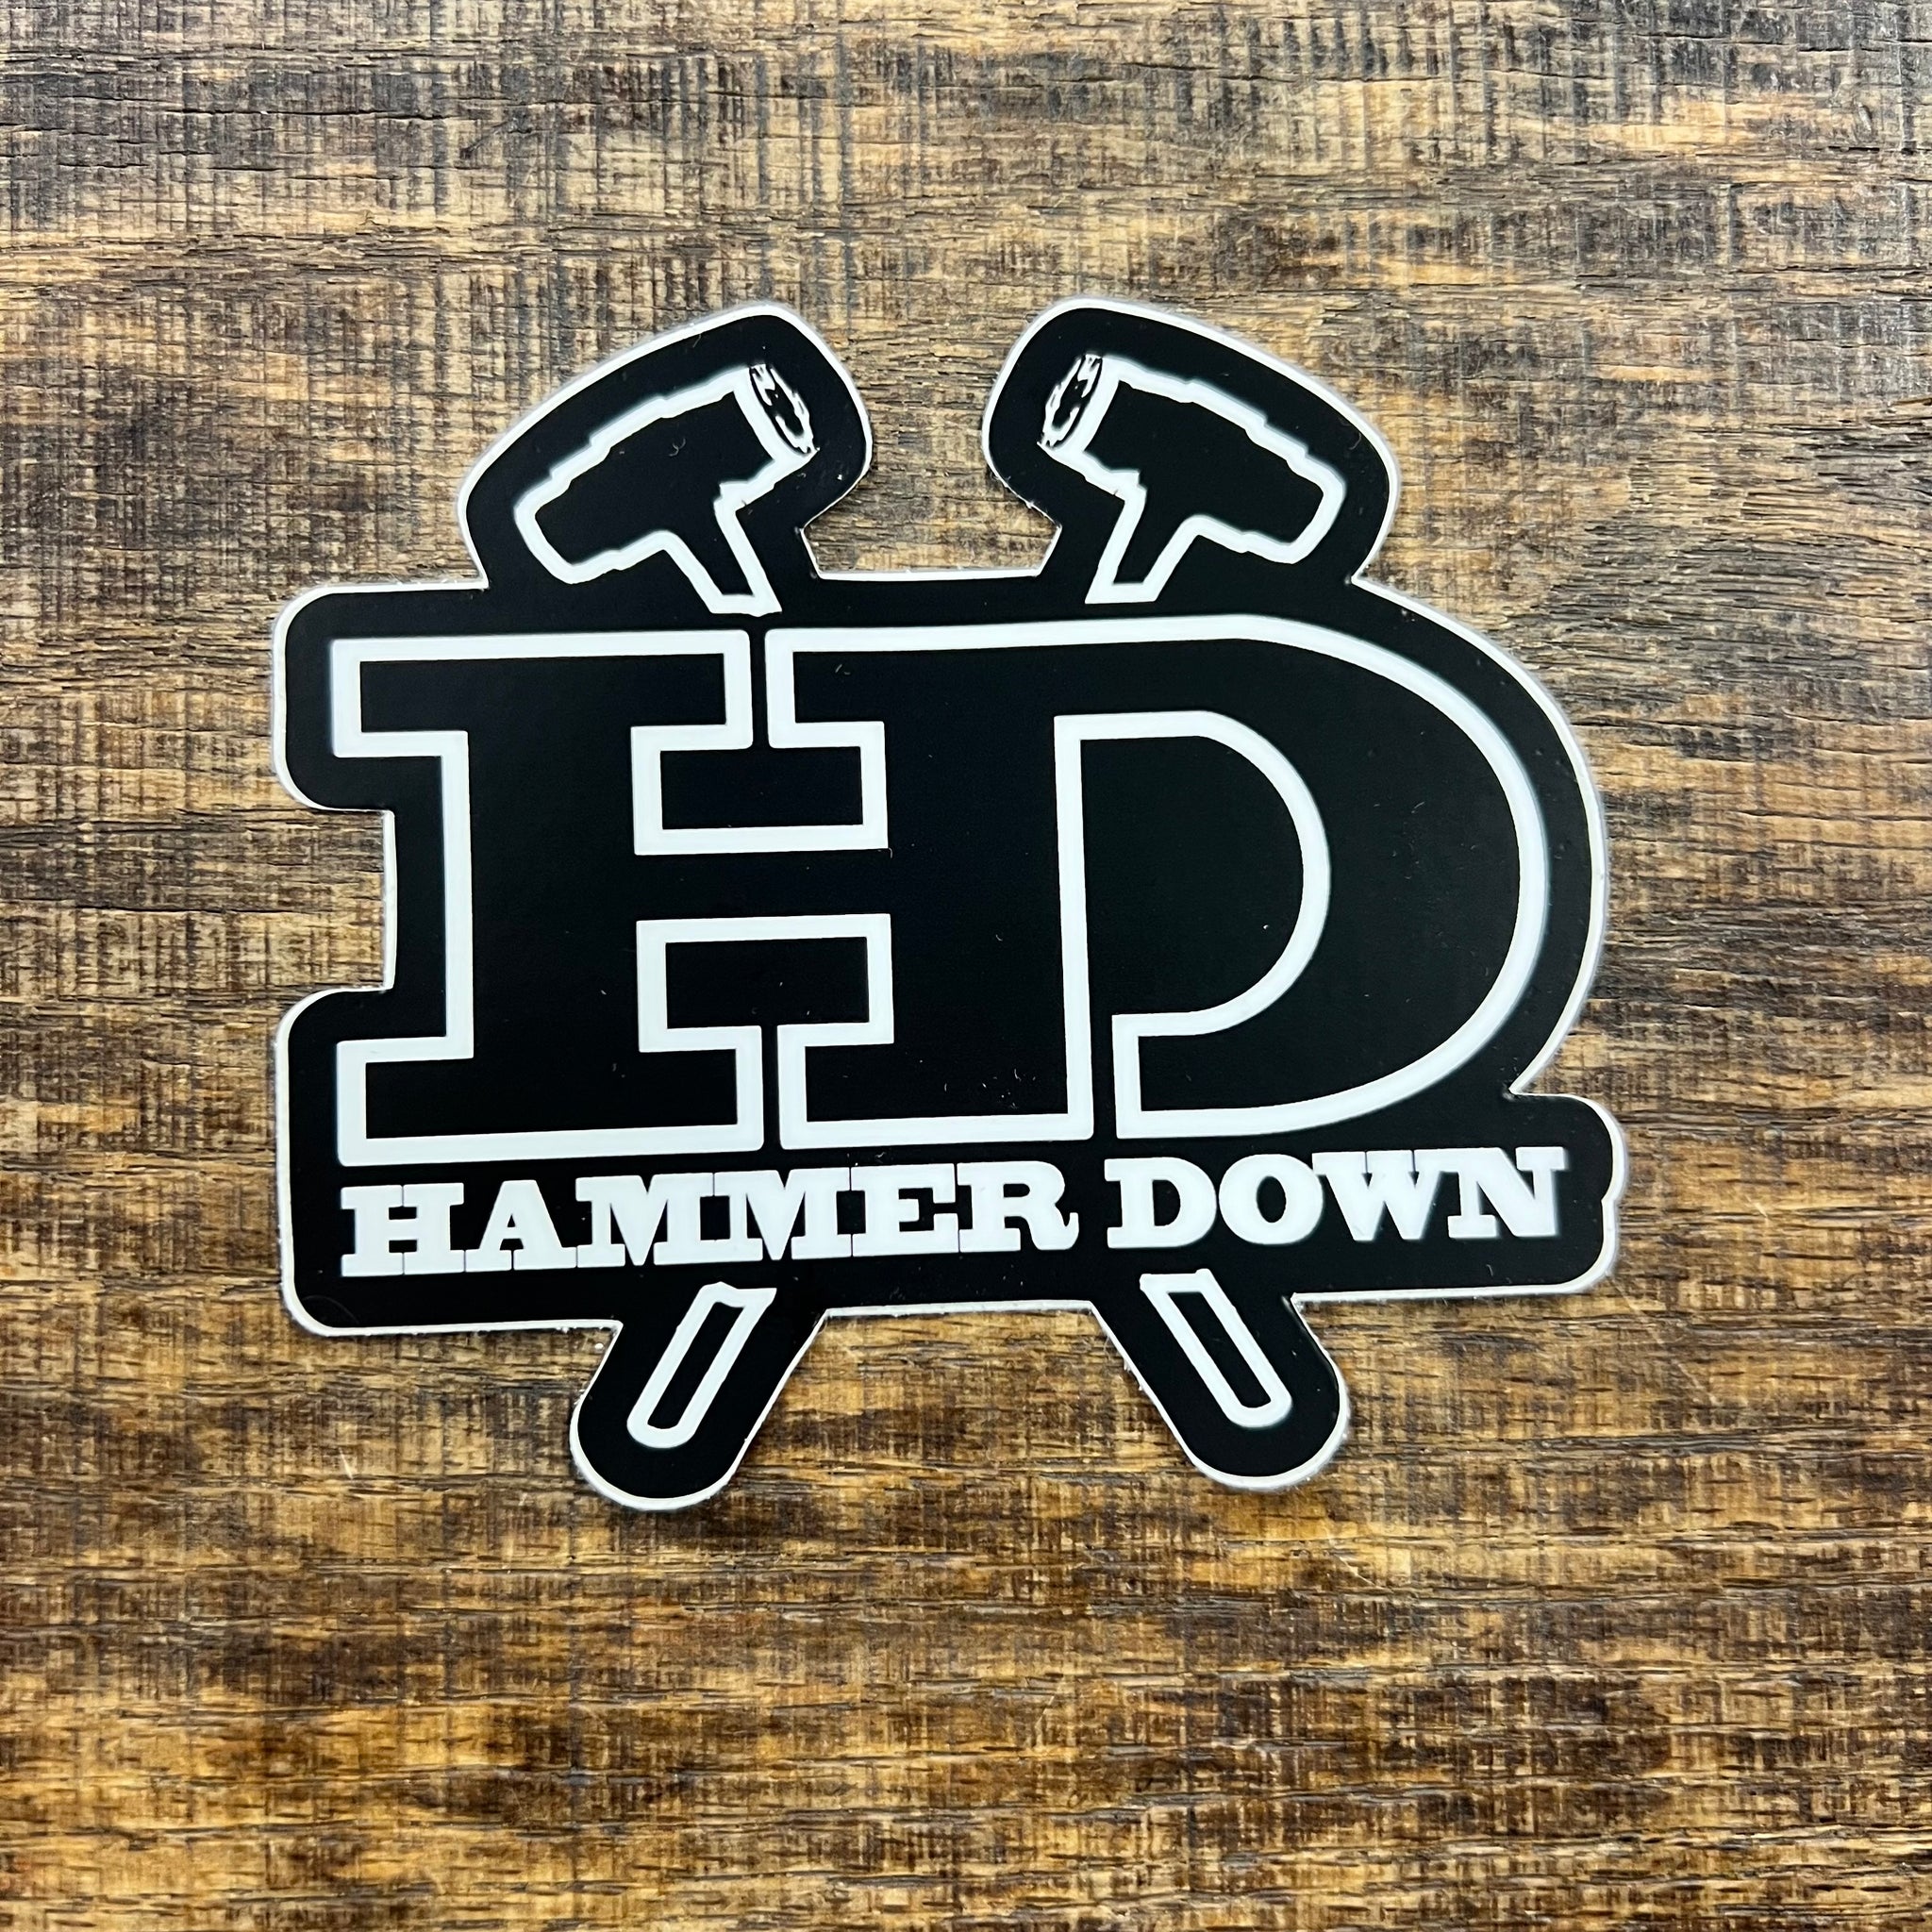 Hammer Down "Sledge Hammers" Sticker - Black and White